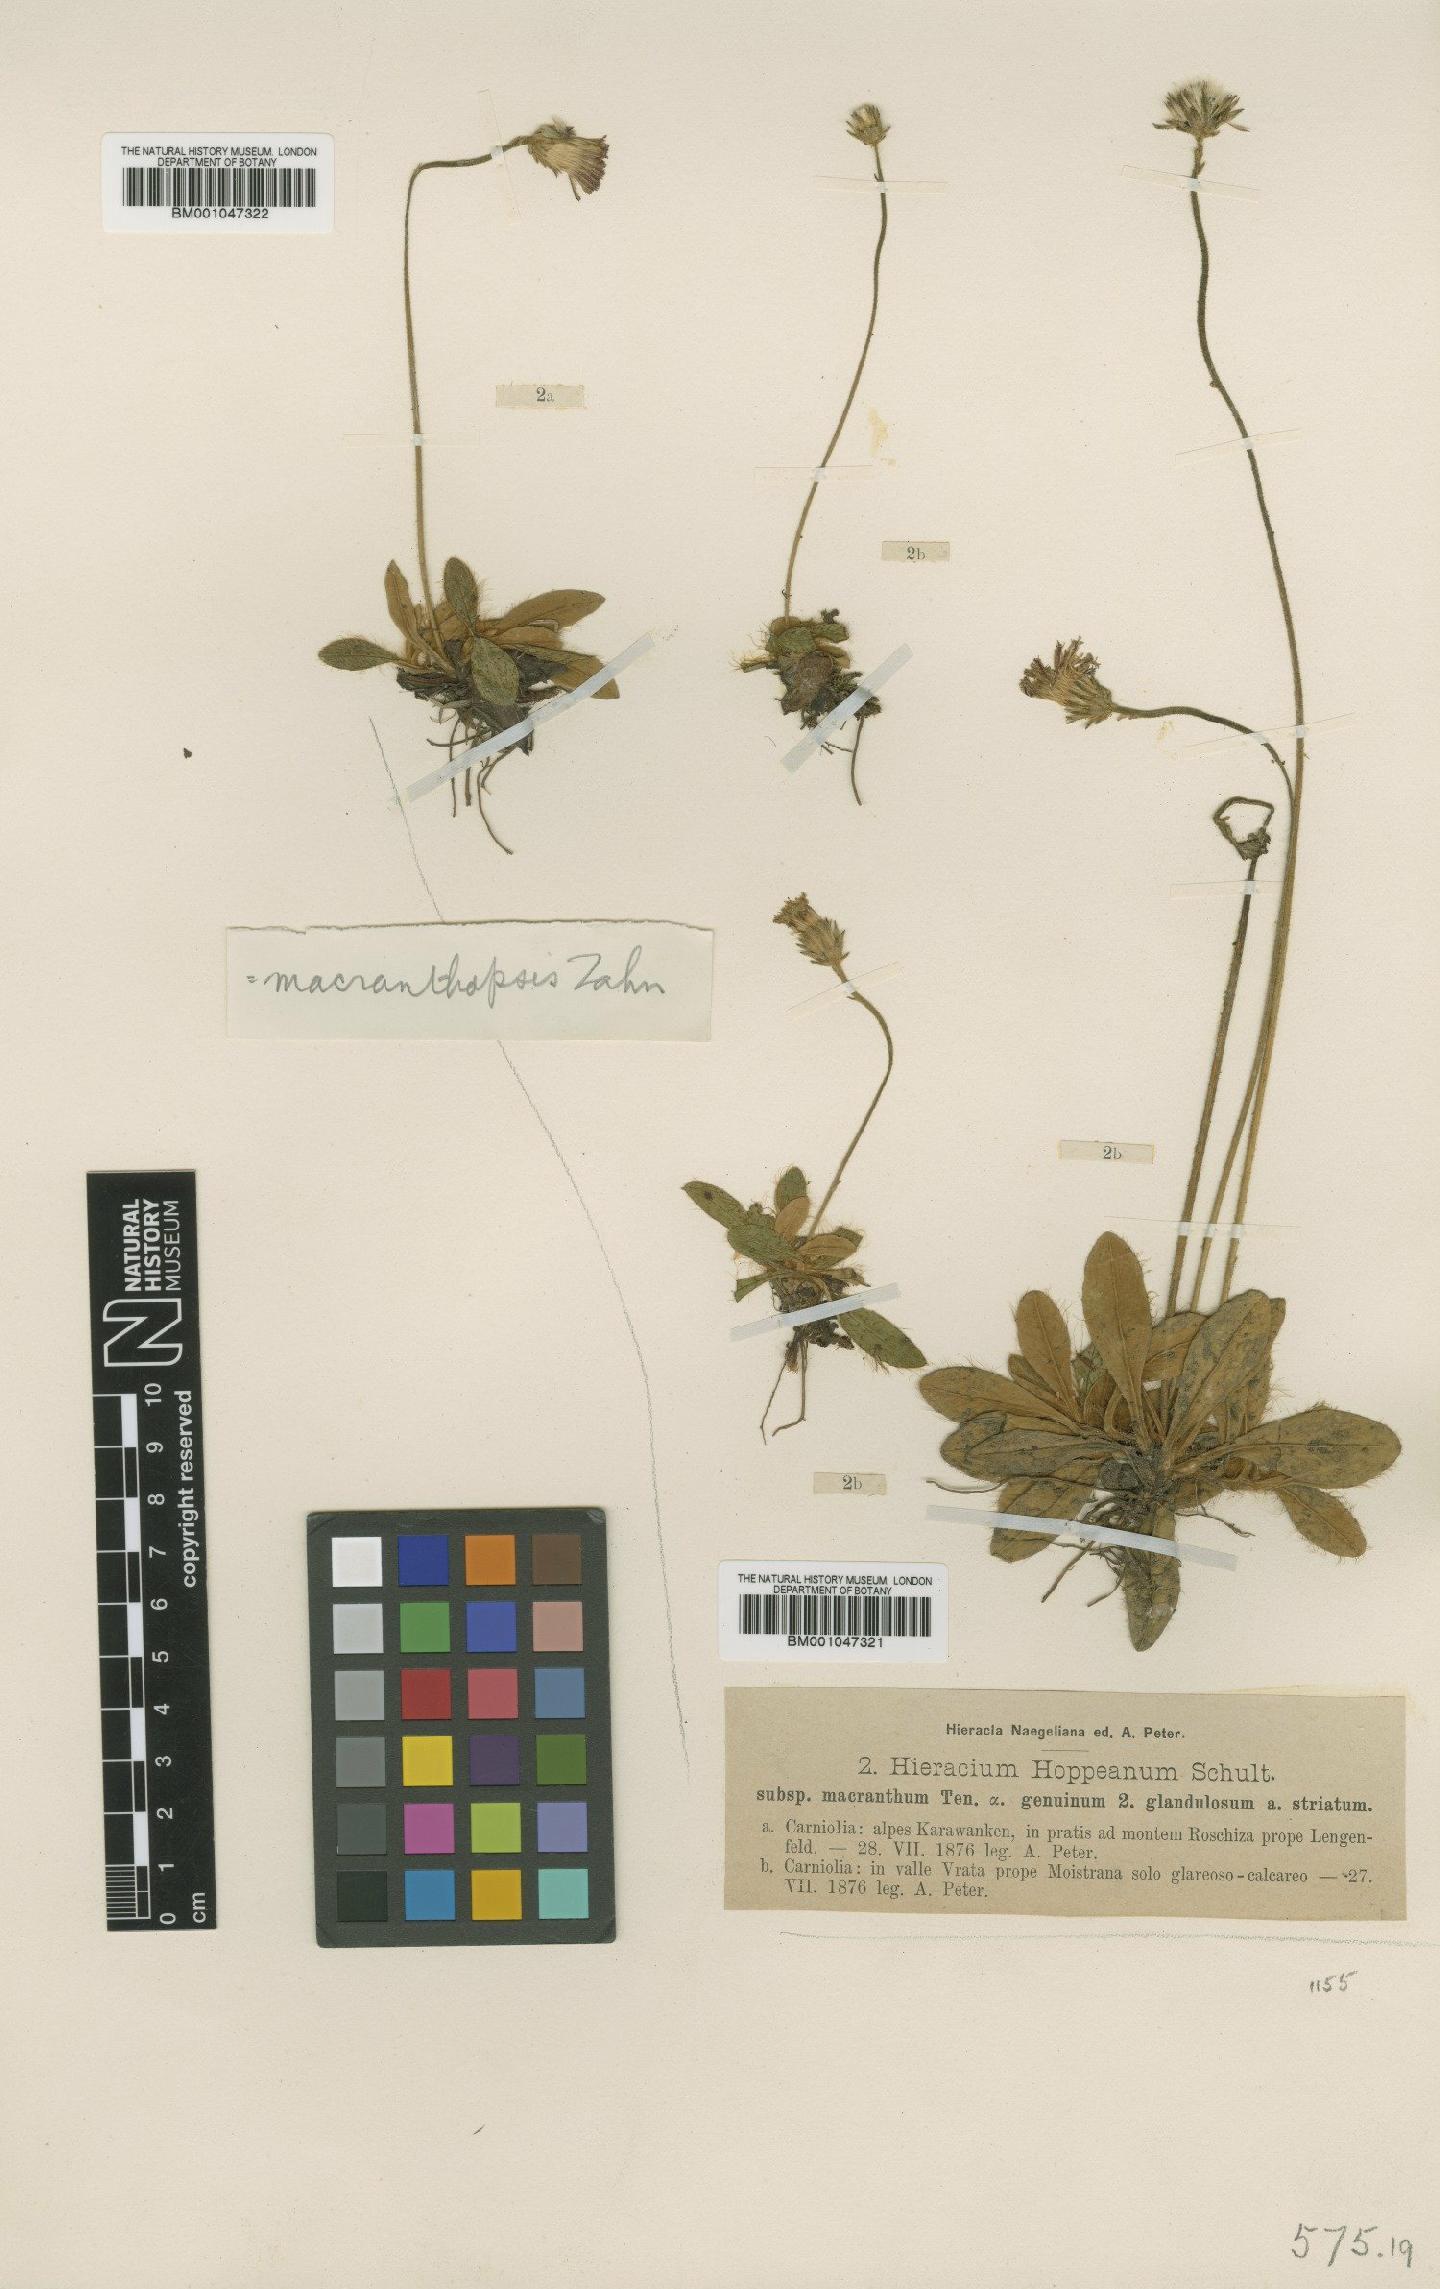 To NHMUK collection (Hieracium hoppeanum subsp. macranthopsis Zahn; NHMUK:ecatalogue:2761362)